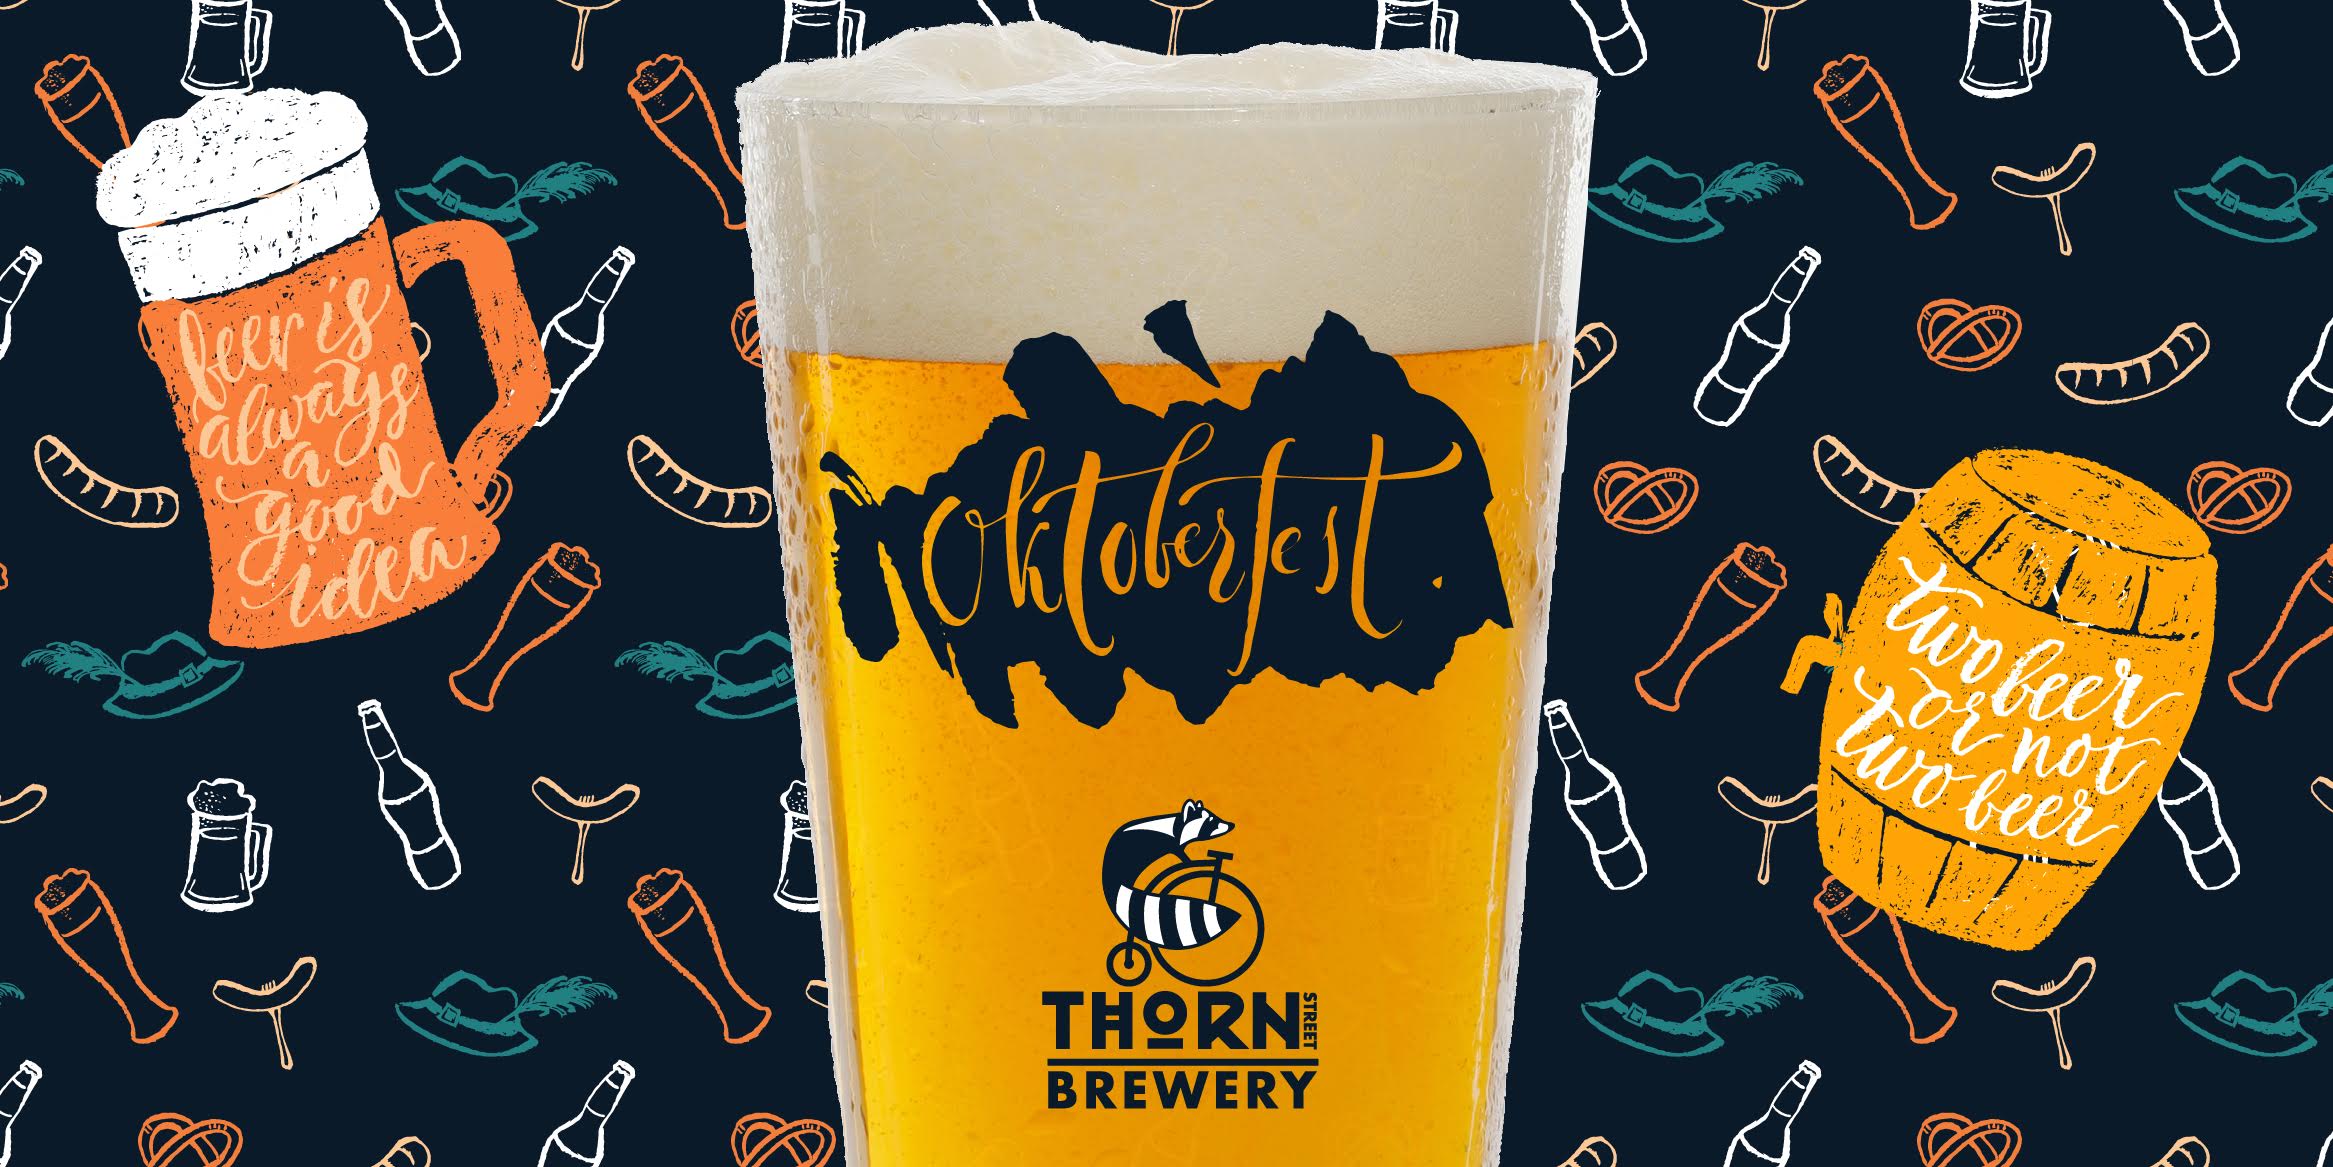 Oktoberfest Beer Release